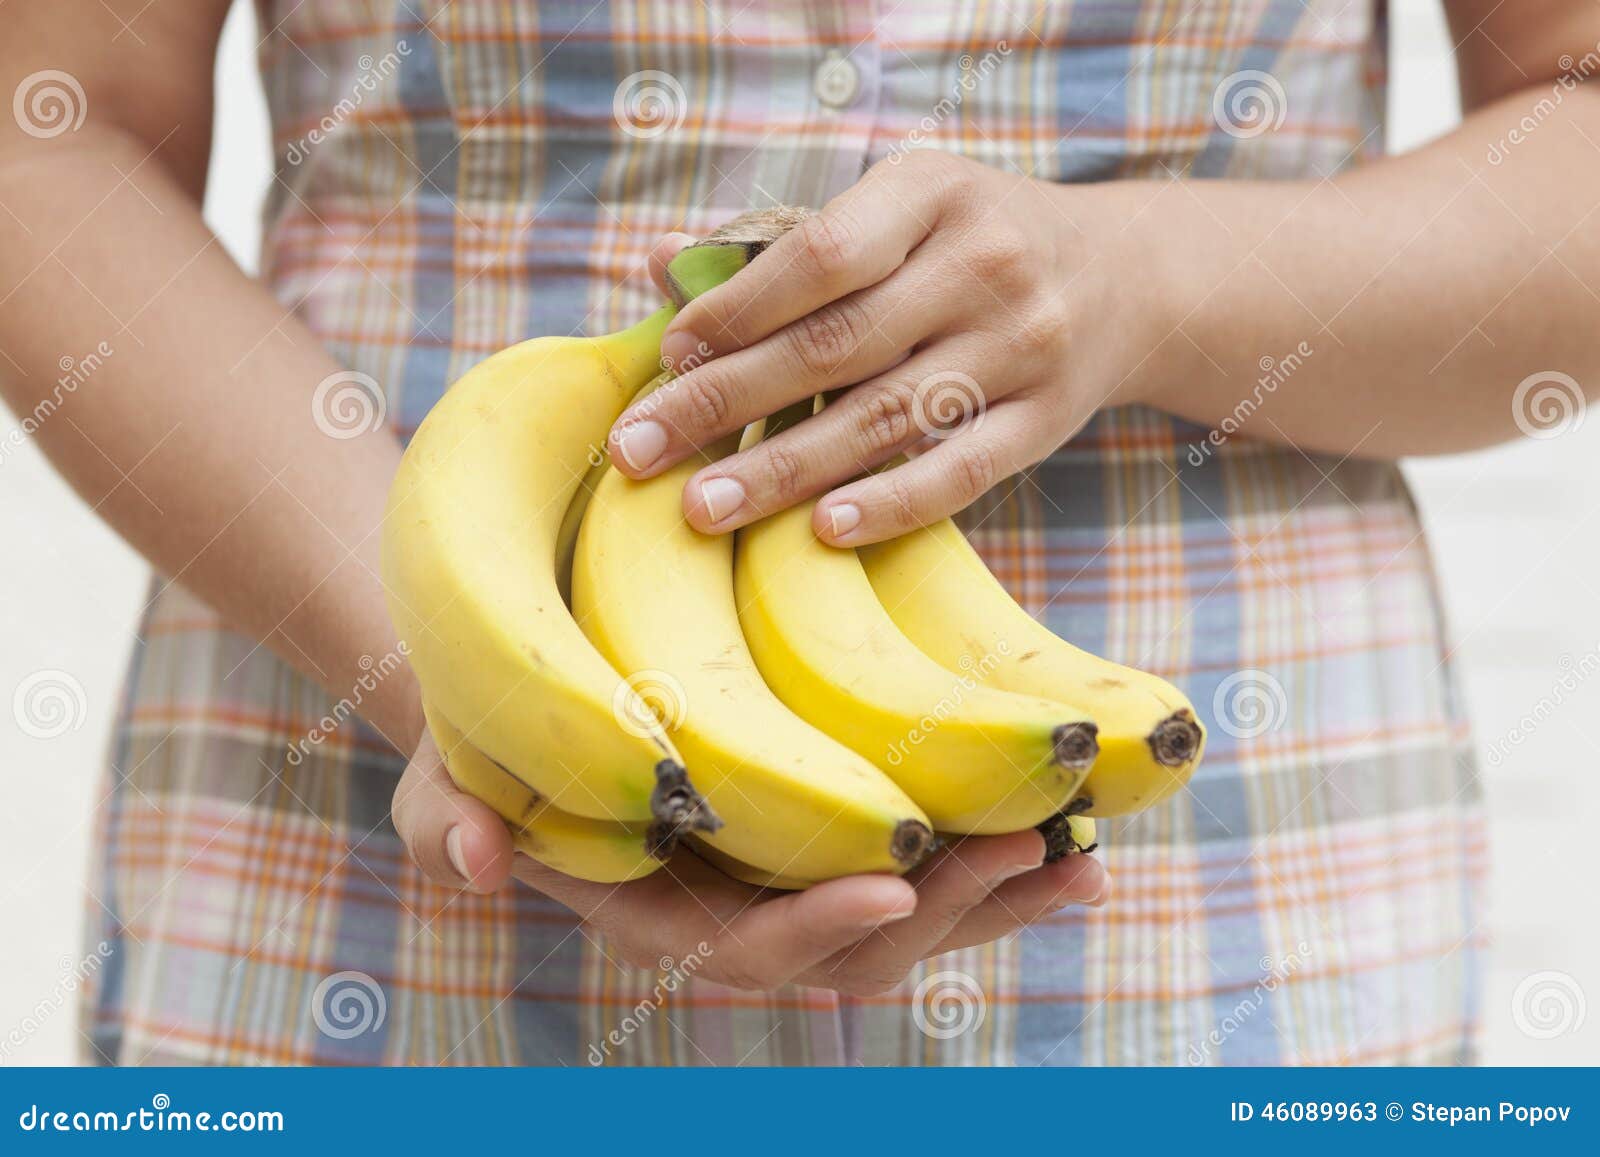 https://thumbs.dreamstime.com/z/bunch-organic-banana-hands-woman-s-46089963.jpg